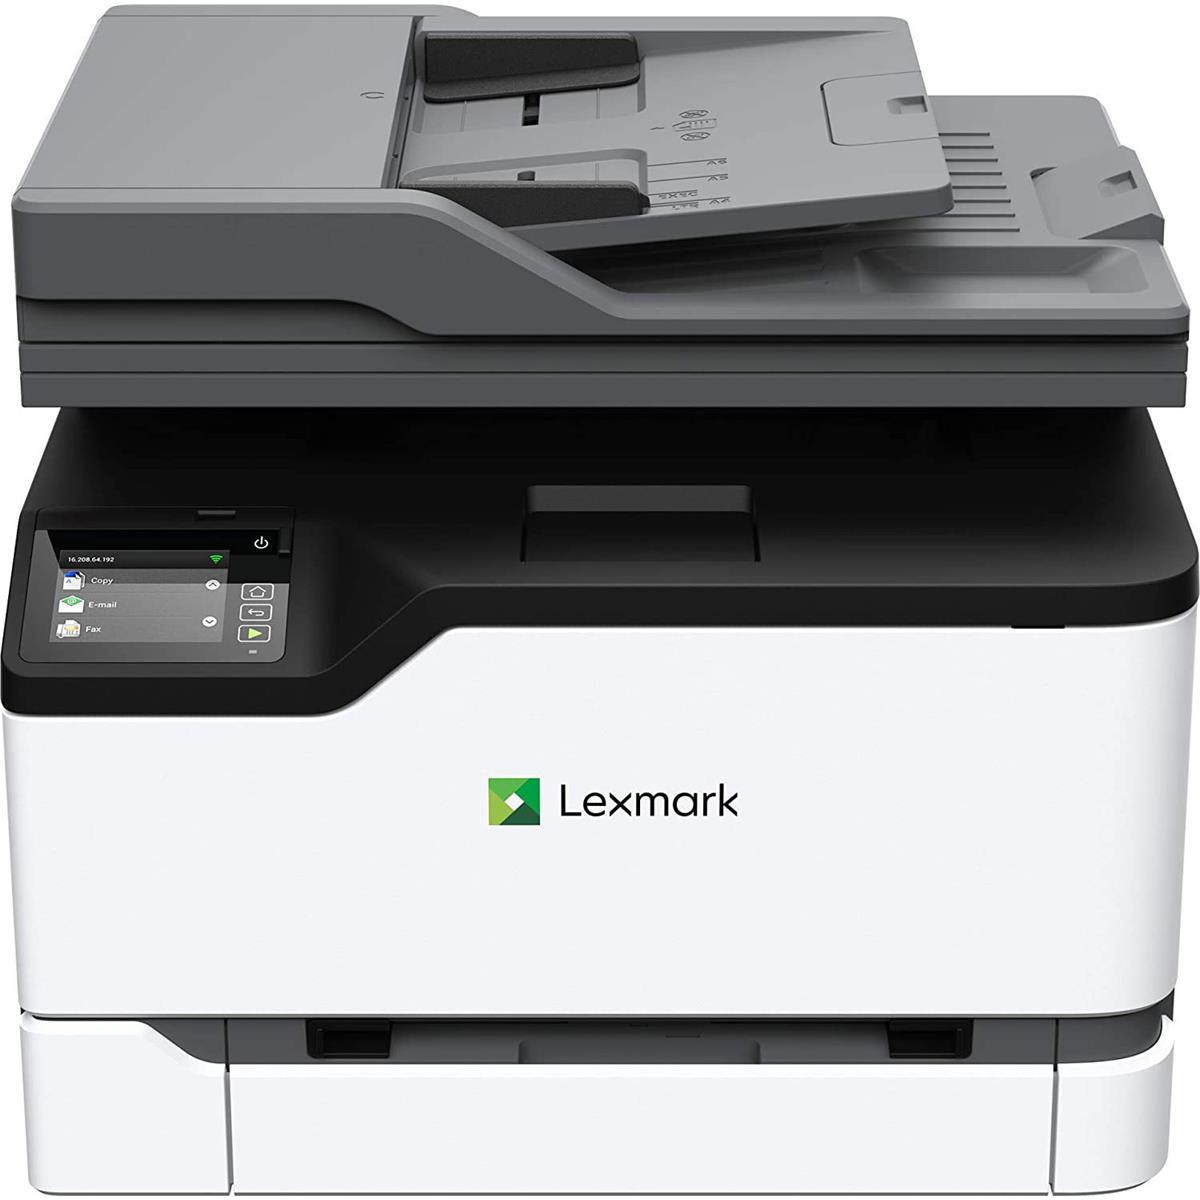 

Lee Filters Lexmark MC3224i Wireless Multifunction Color Duplex Laser Printer, 24 ppm